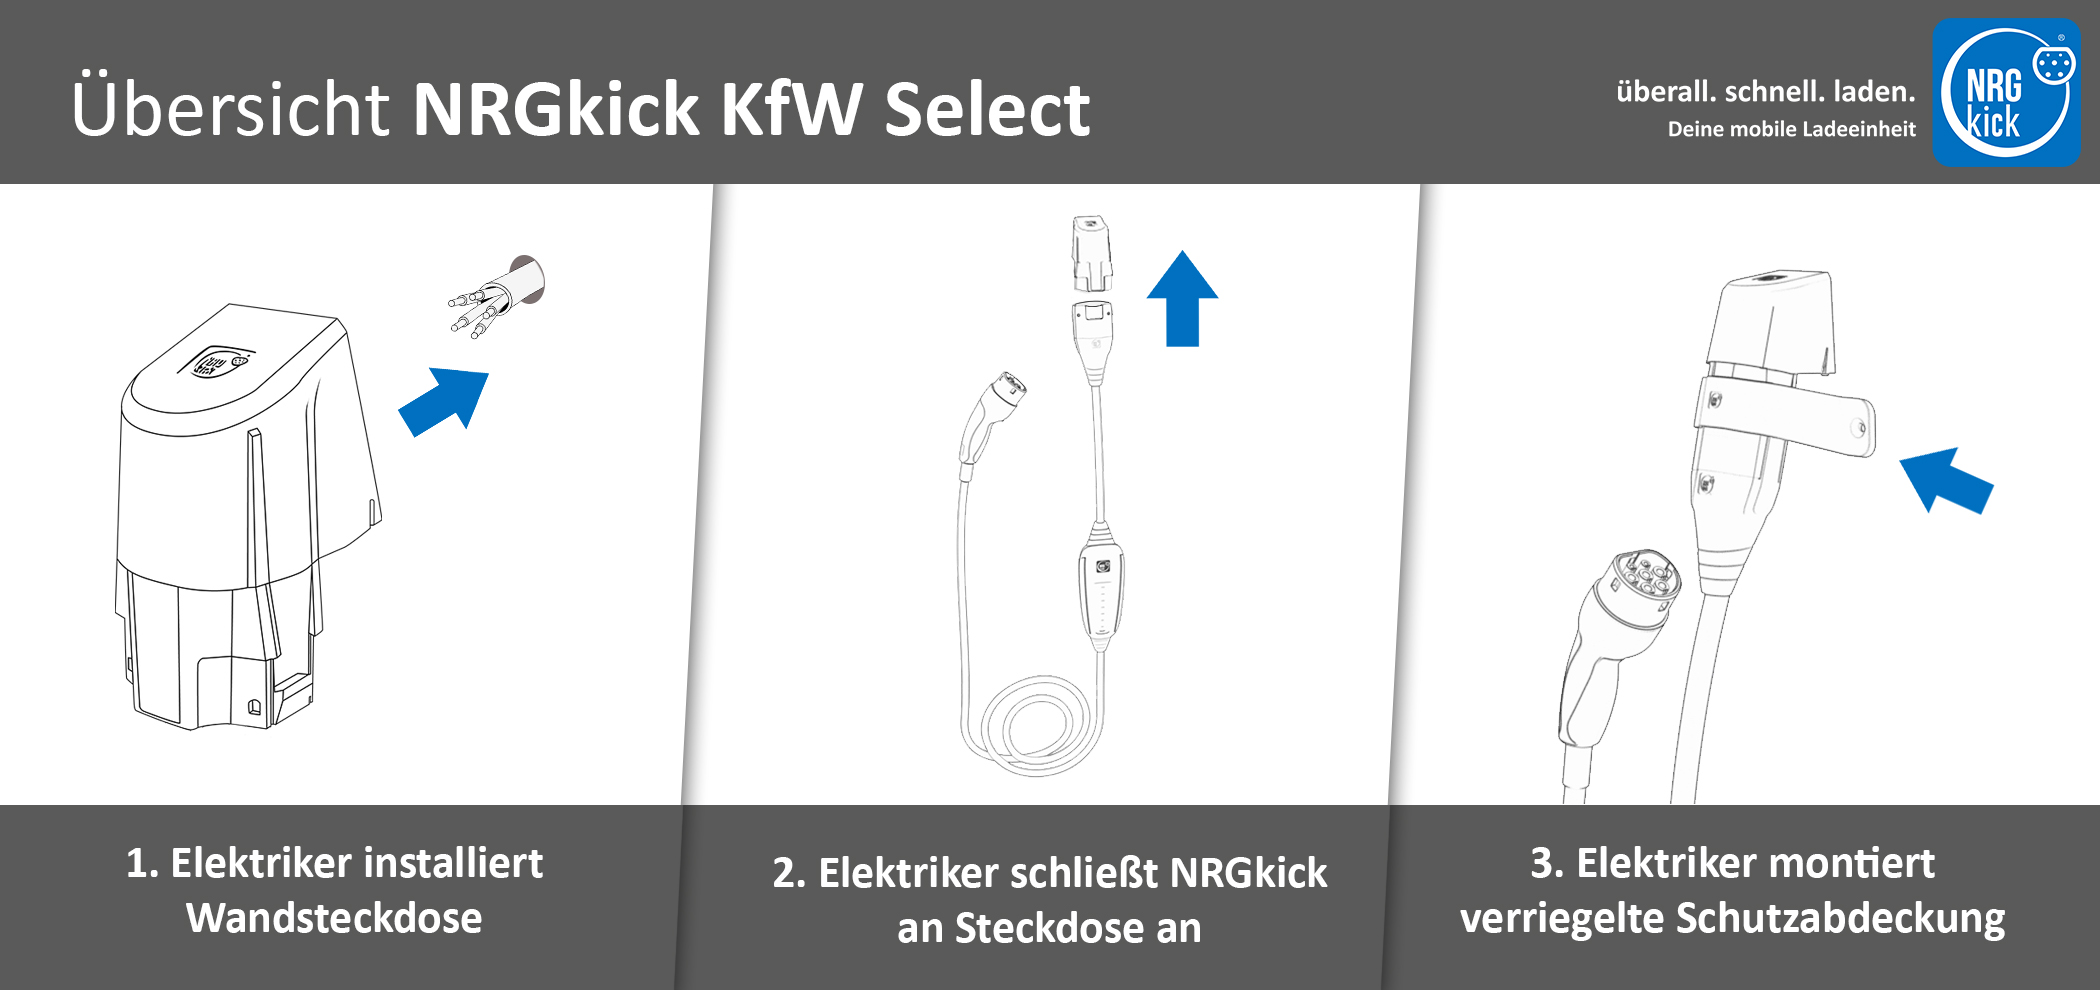 NRGkick KfW Select